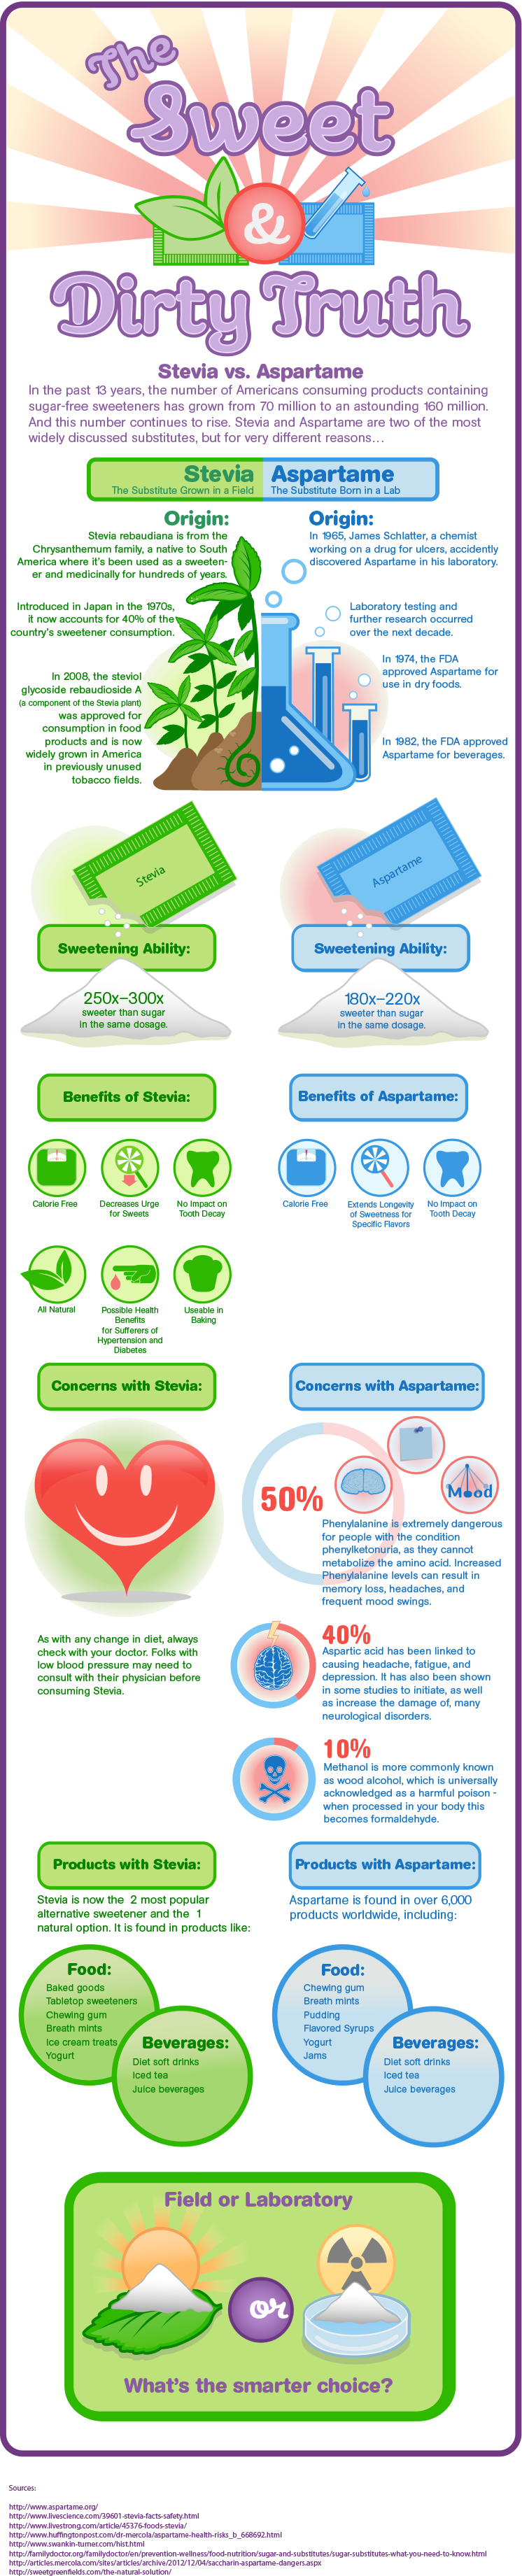 Stevia vs. Aspartame: Which One Do You Choose? Infographic